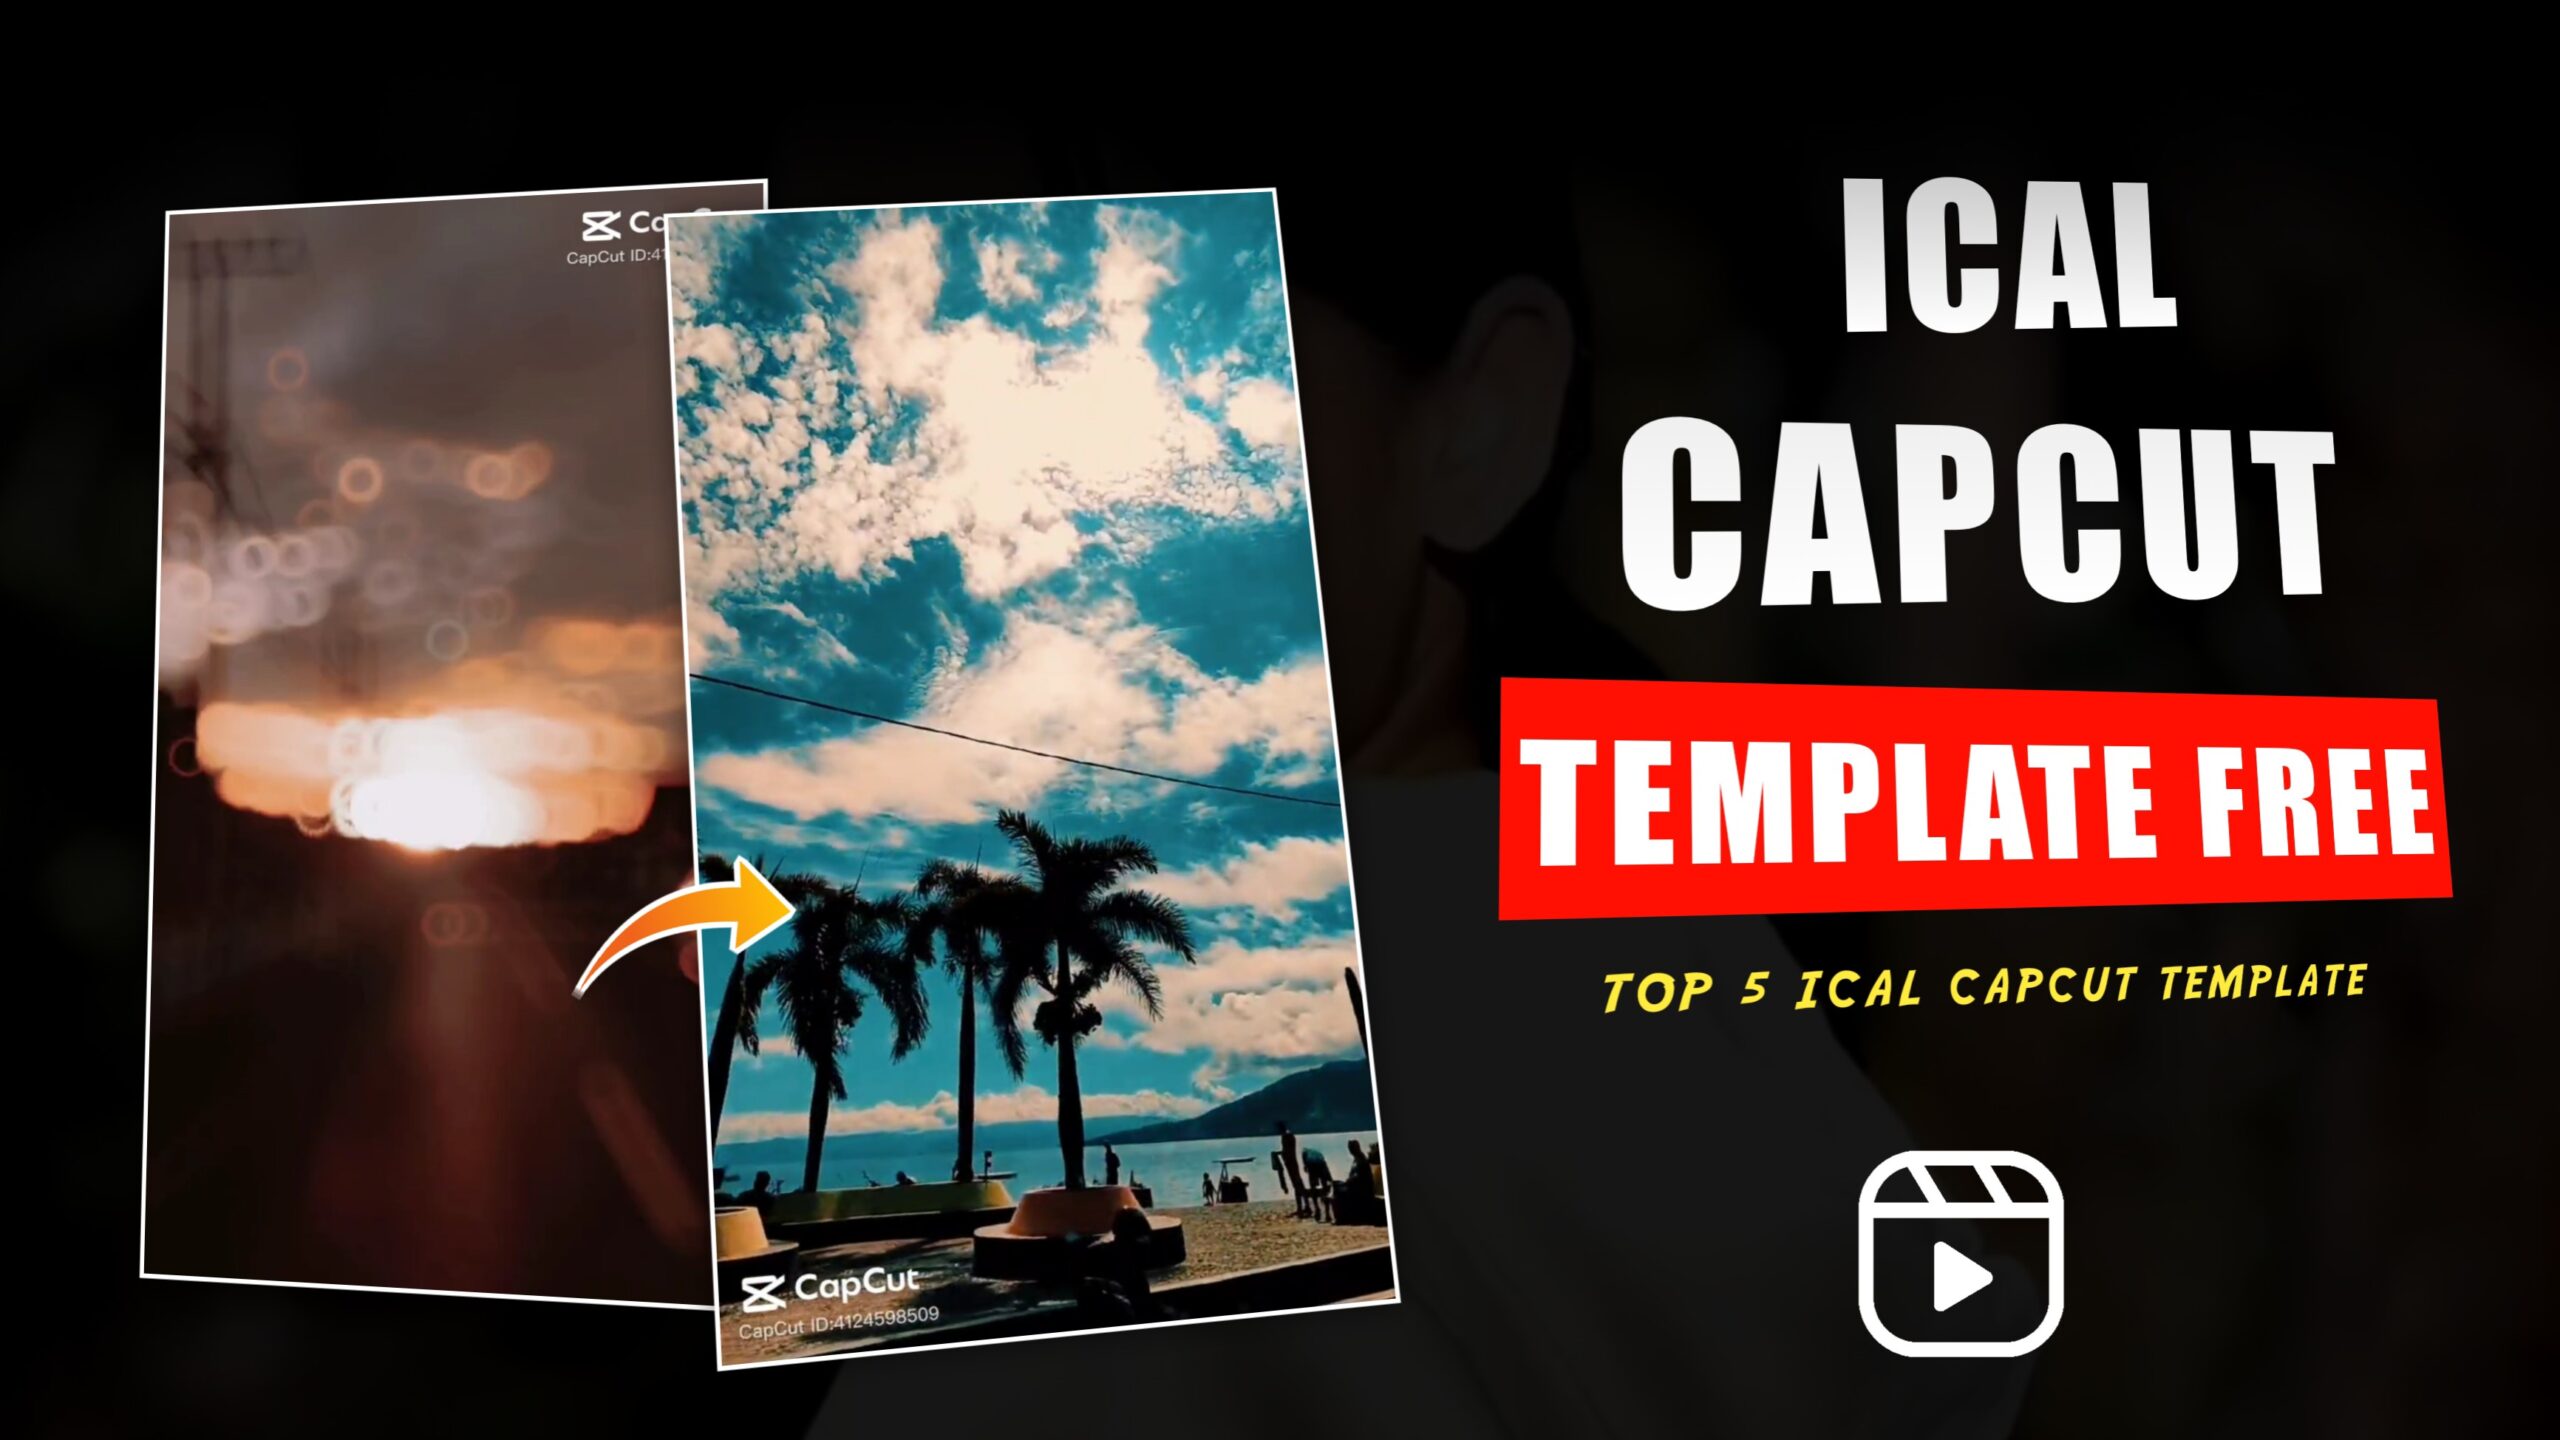 Ical capcut template link 2023 Top 5 ical capcut template link 2023